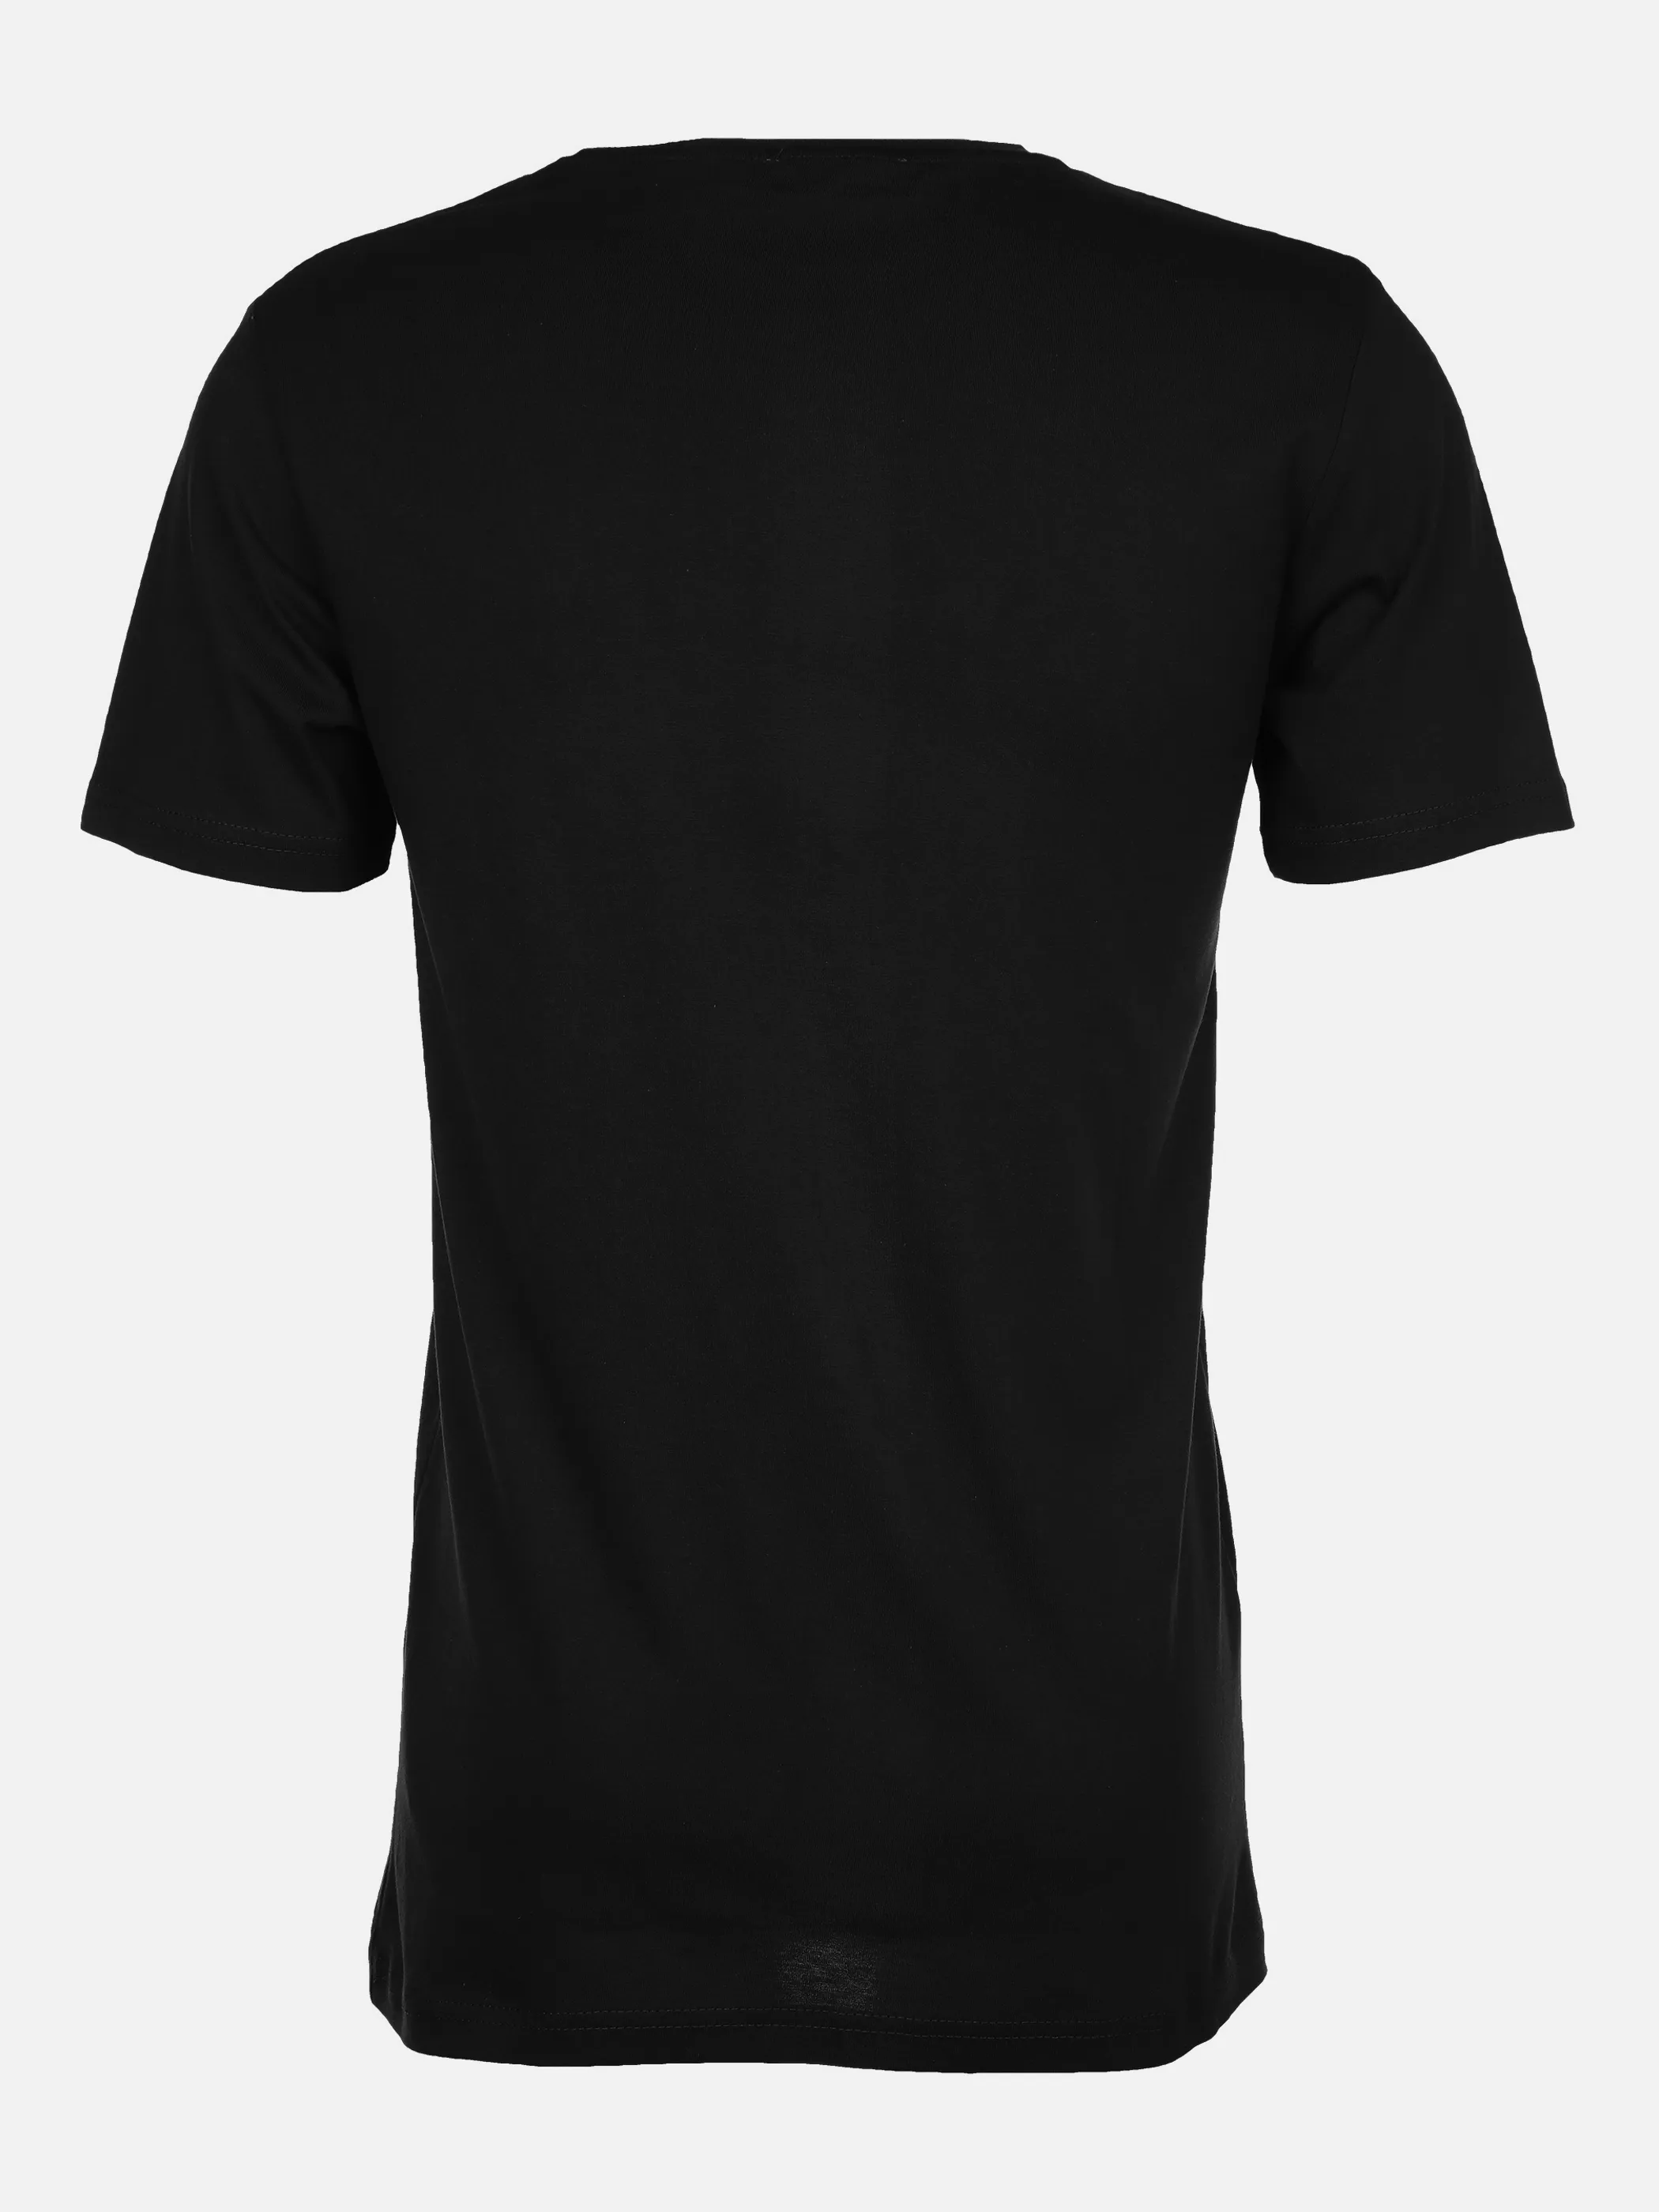 Harvey Miller He. T-Shirt 1/2 Arm Logo Schwarz 882848 BLACK 2